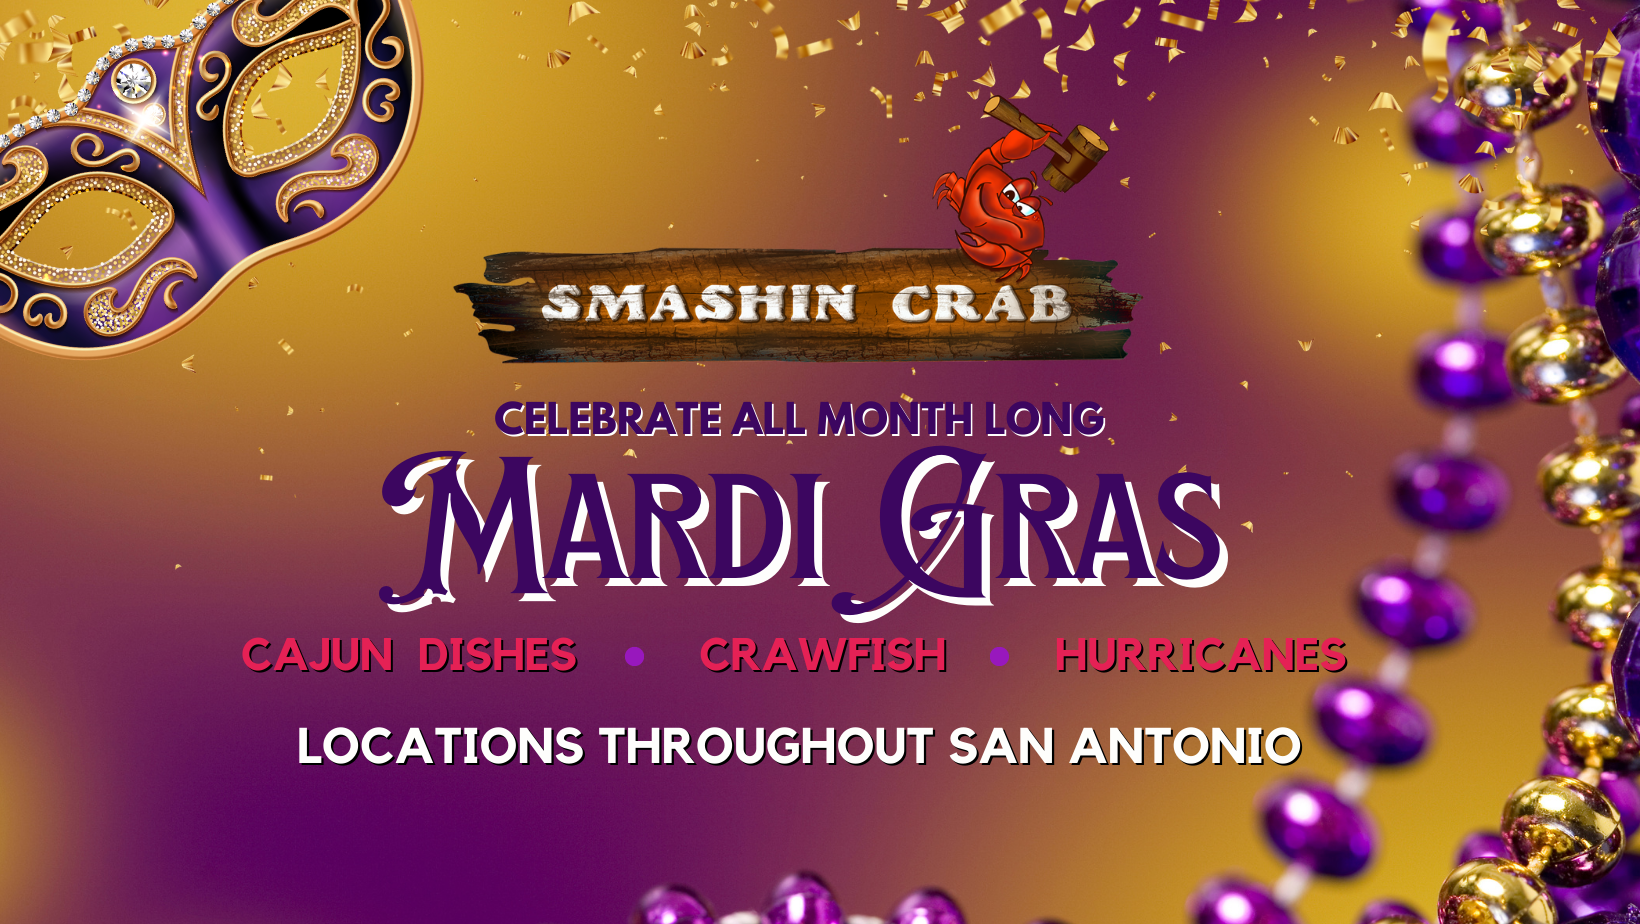 Flyer for Mardi Gras celebration at Smashin' Crab